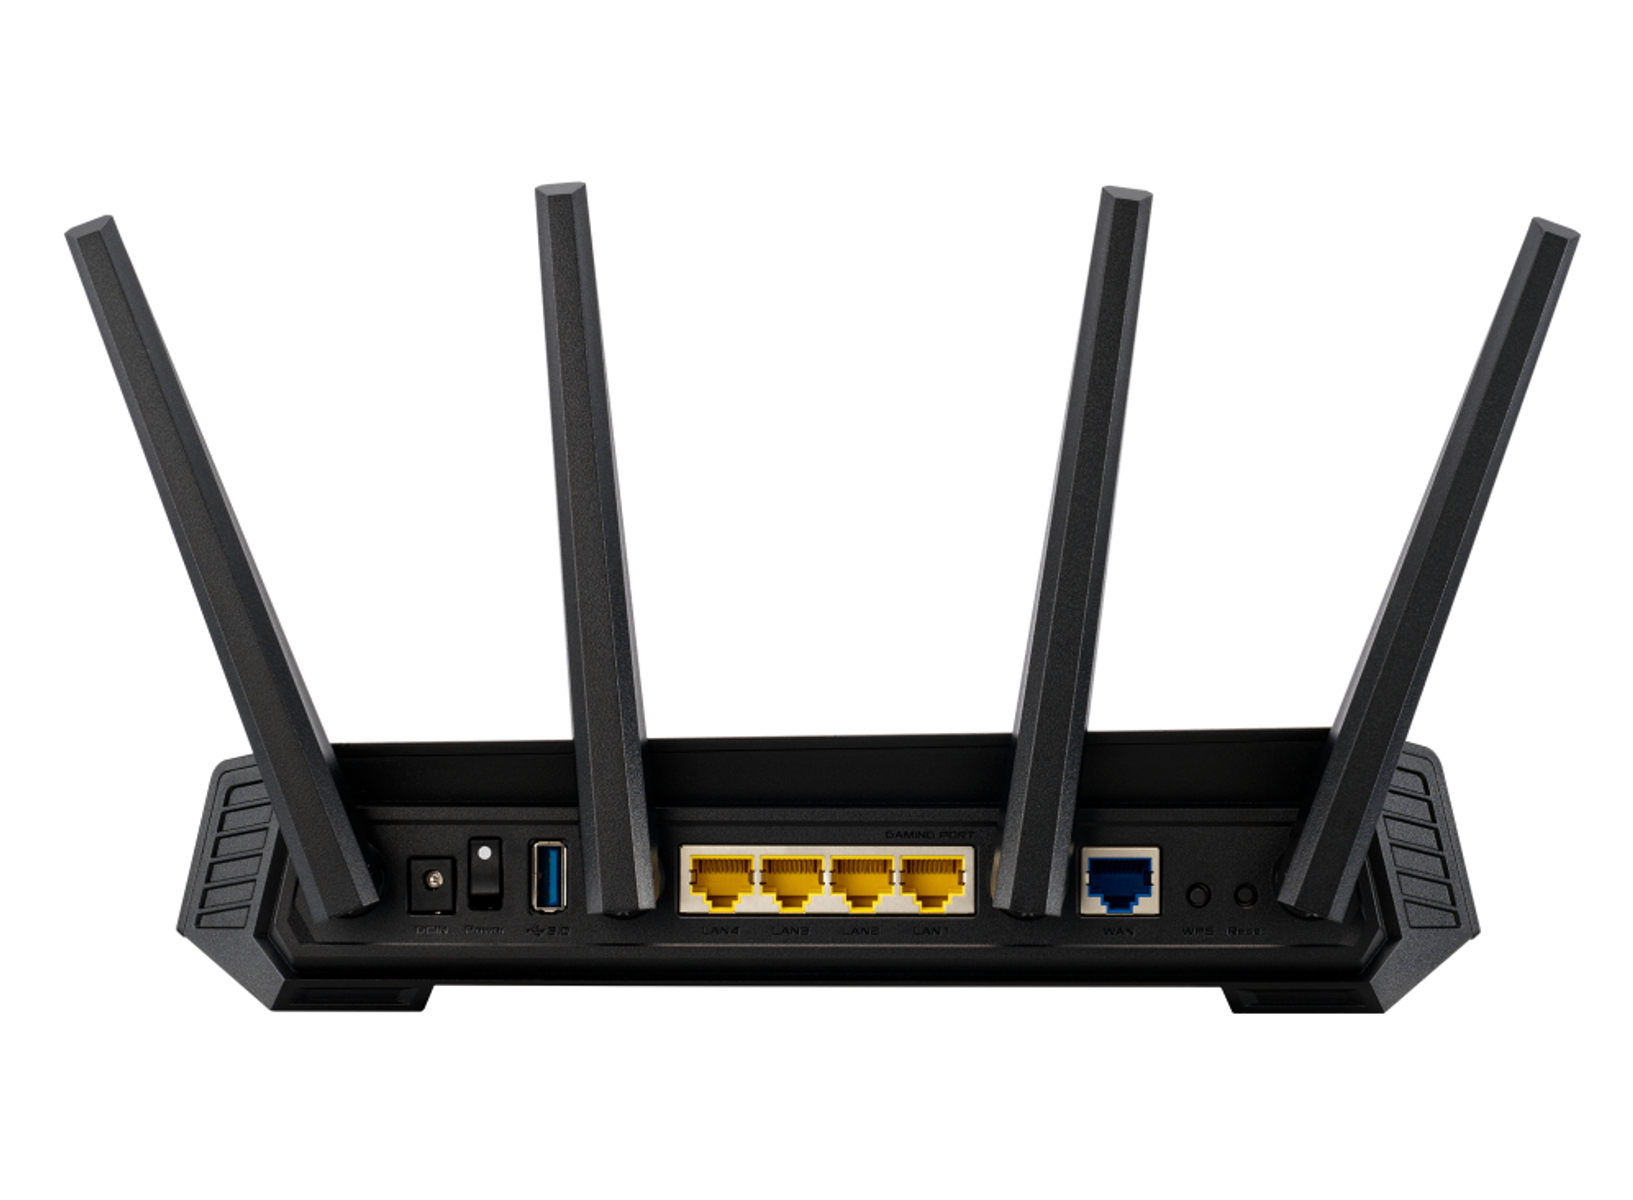 GS-AX5400 90IG06L0-MO3R10 AIMESH 5,378 ASUS Router Gbit/s (P)